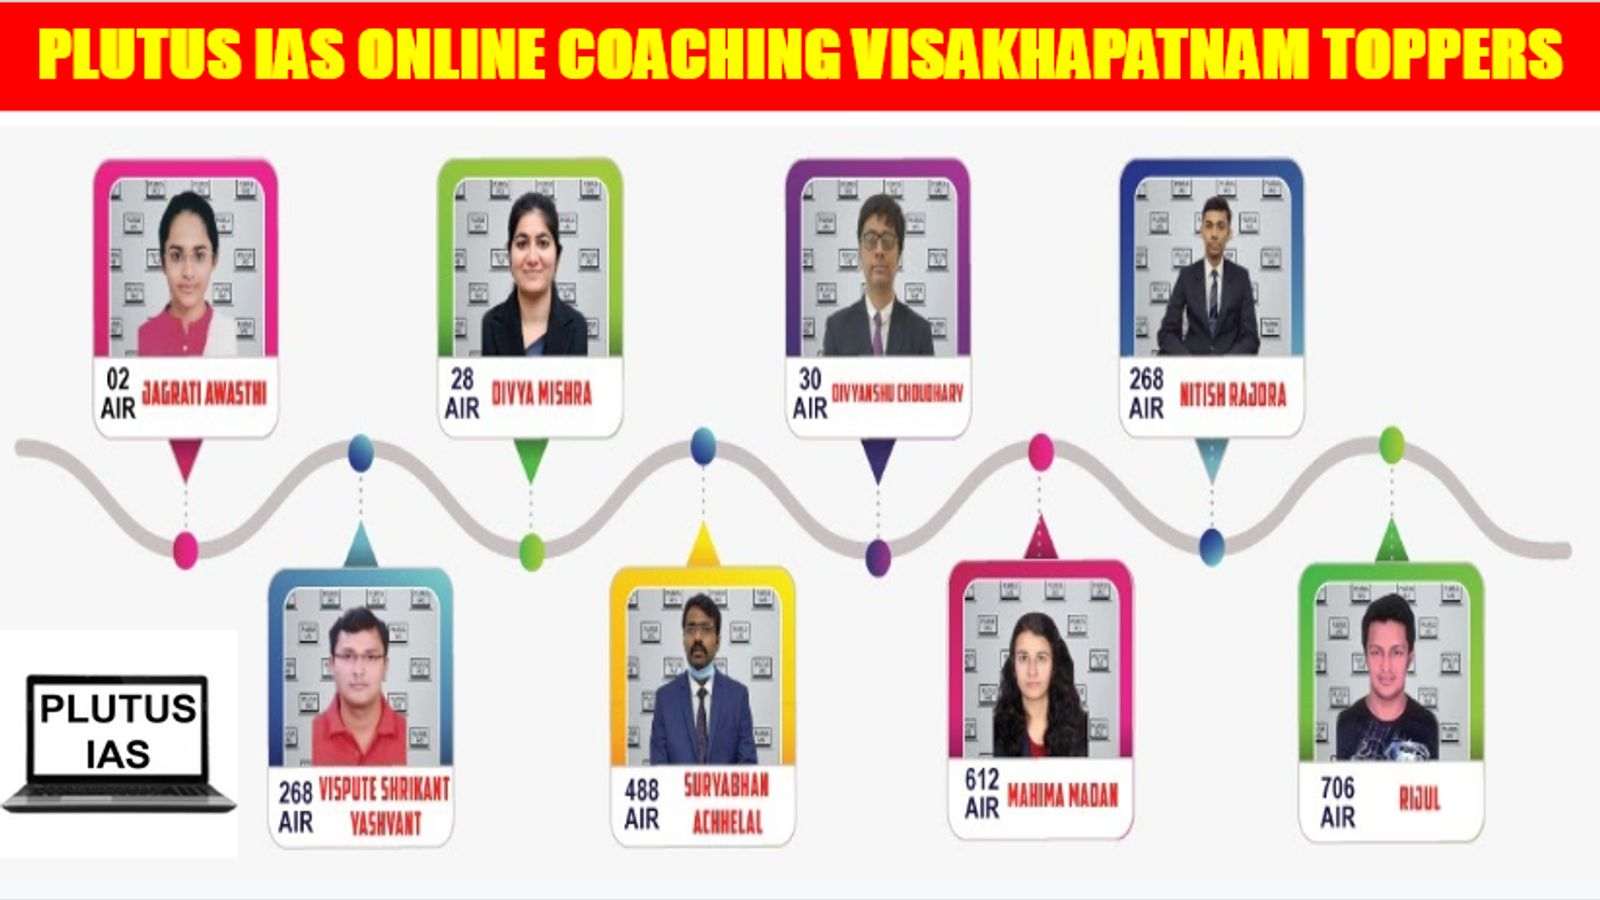 Plutus IAS Online Coaching Visakhapatnam Toppers